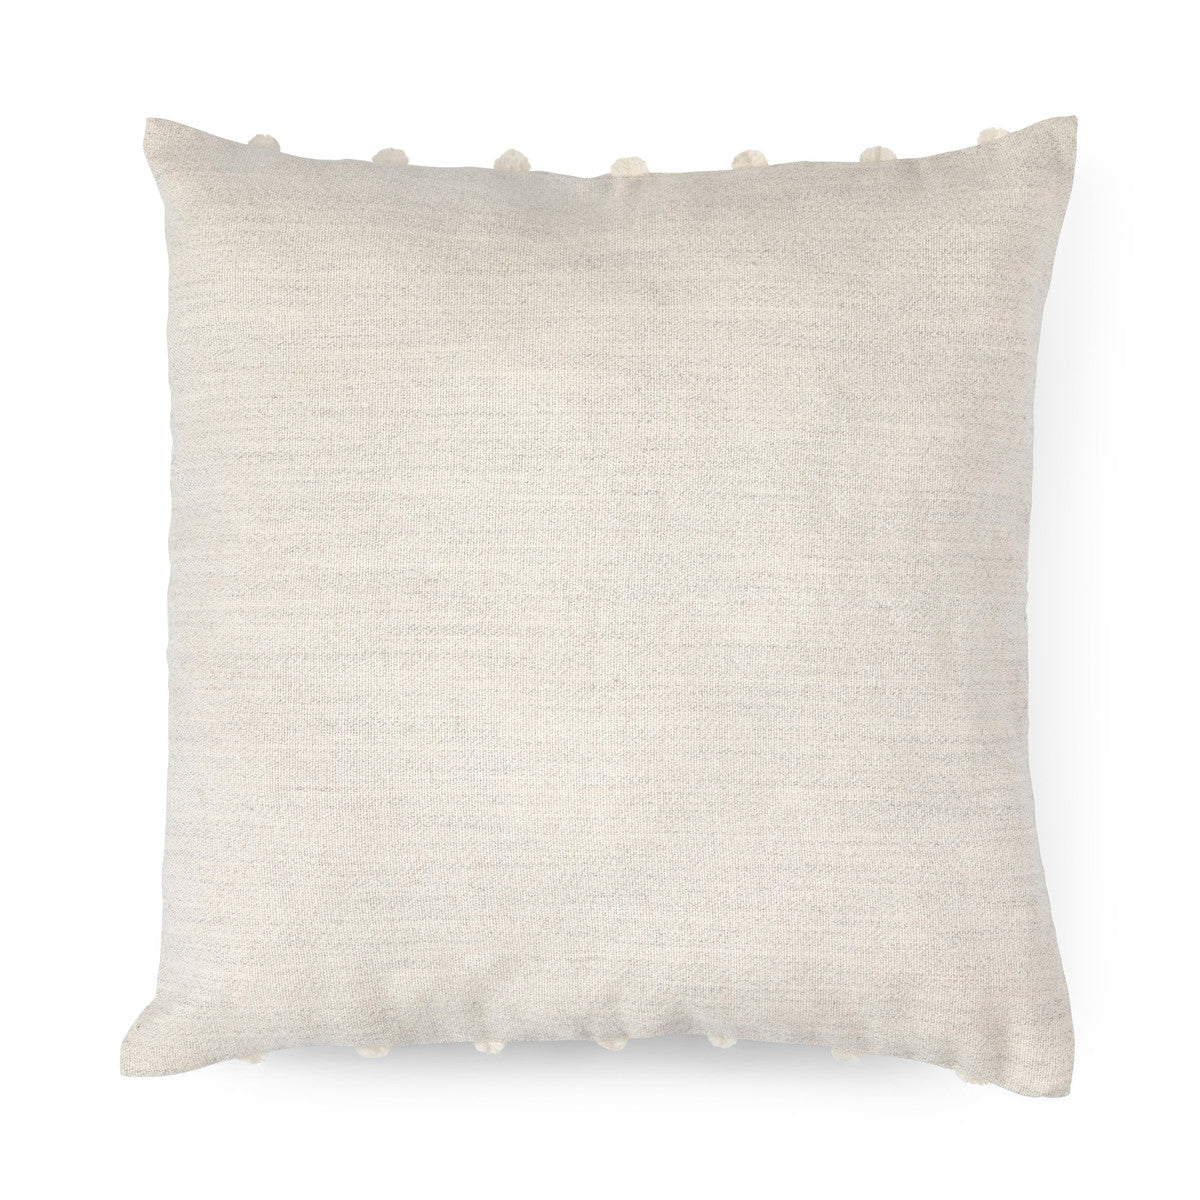 Texture Stripe Alpaca Wool Square Pillow